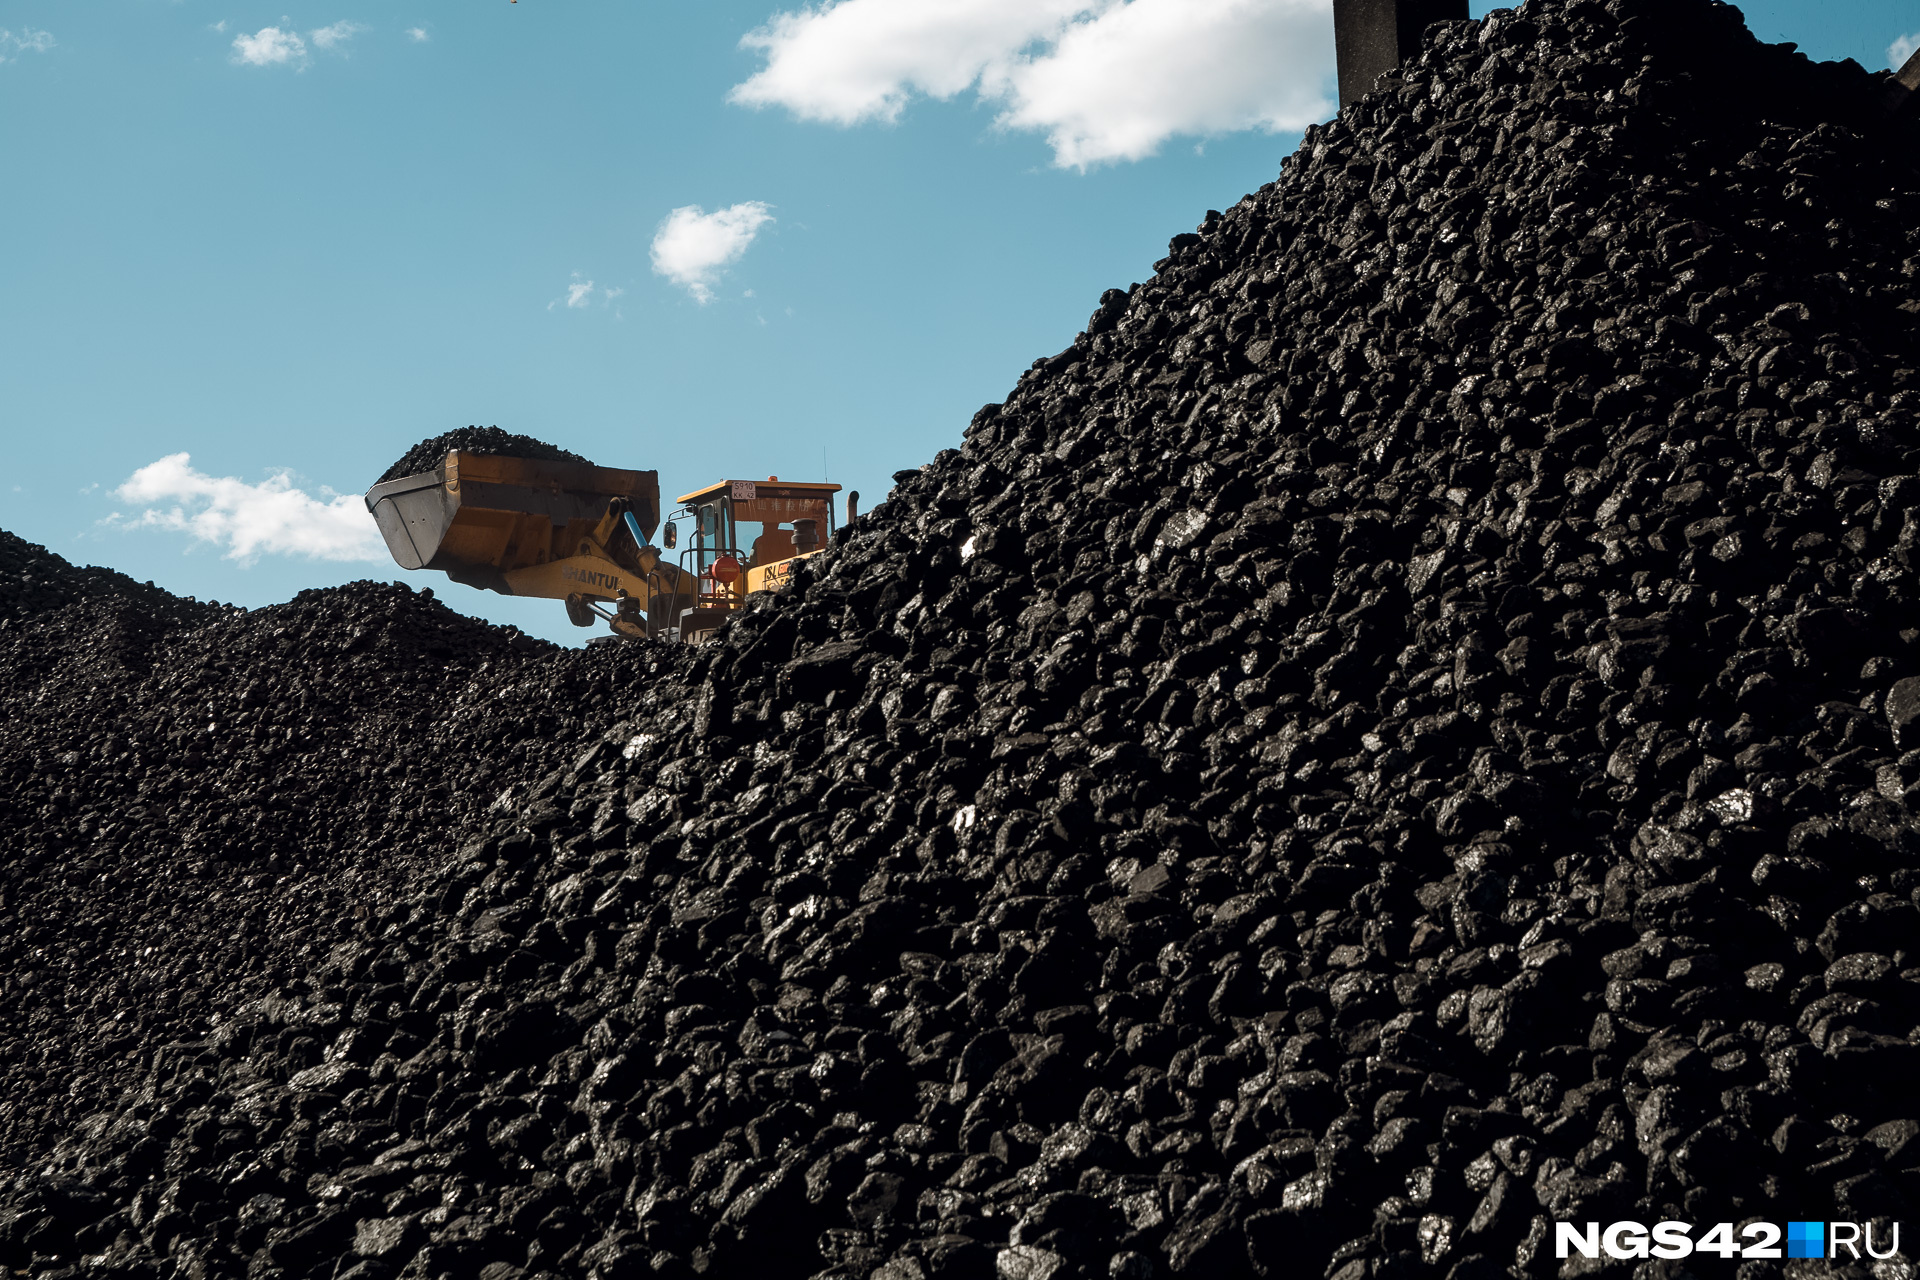 Работники предприятия в Чите похитили уголь на 1,5 млн рублей